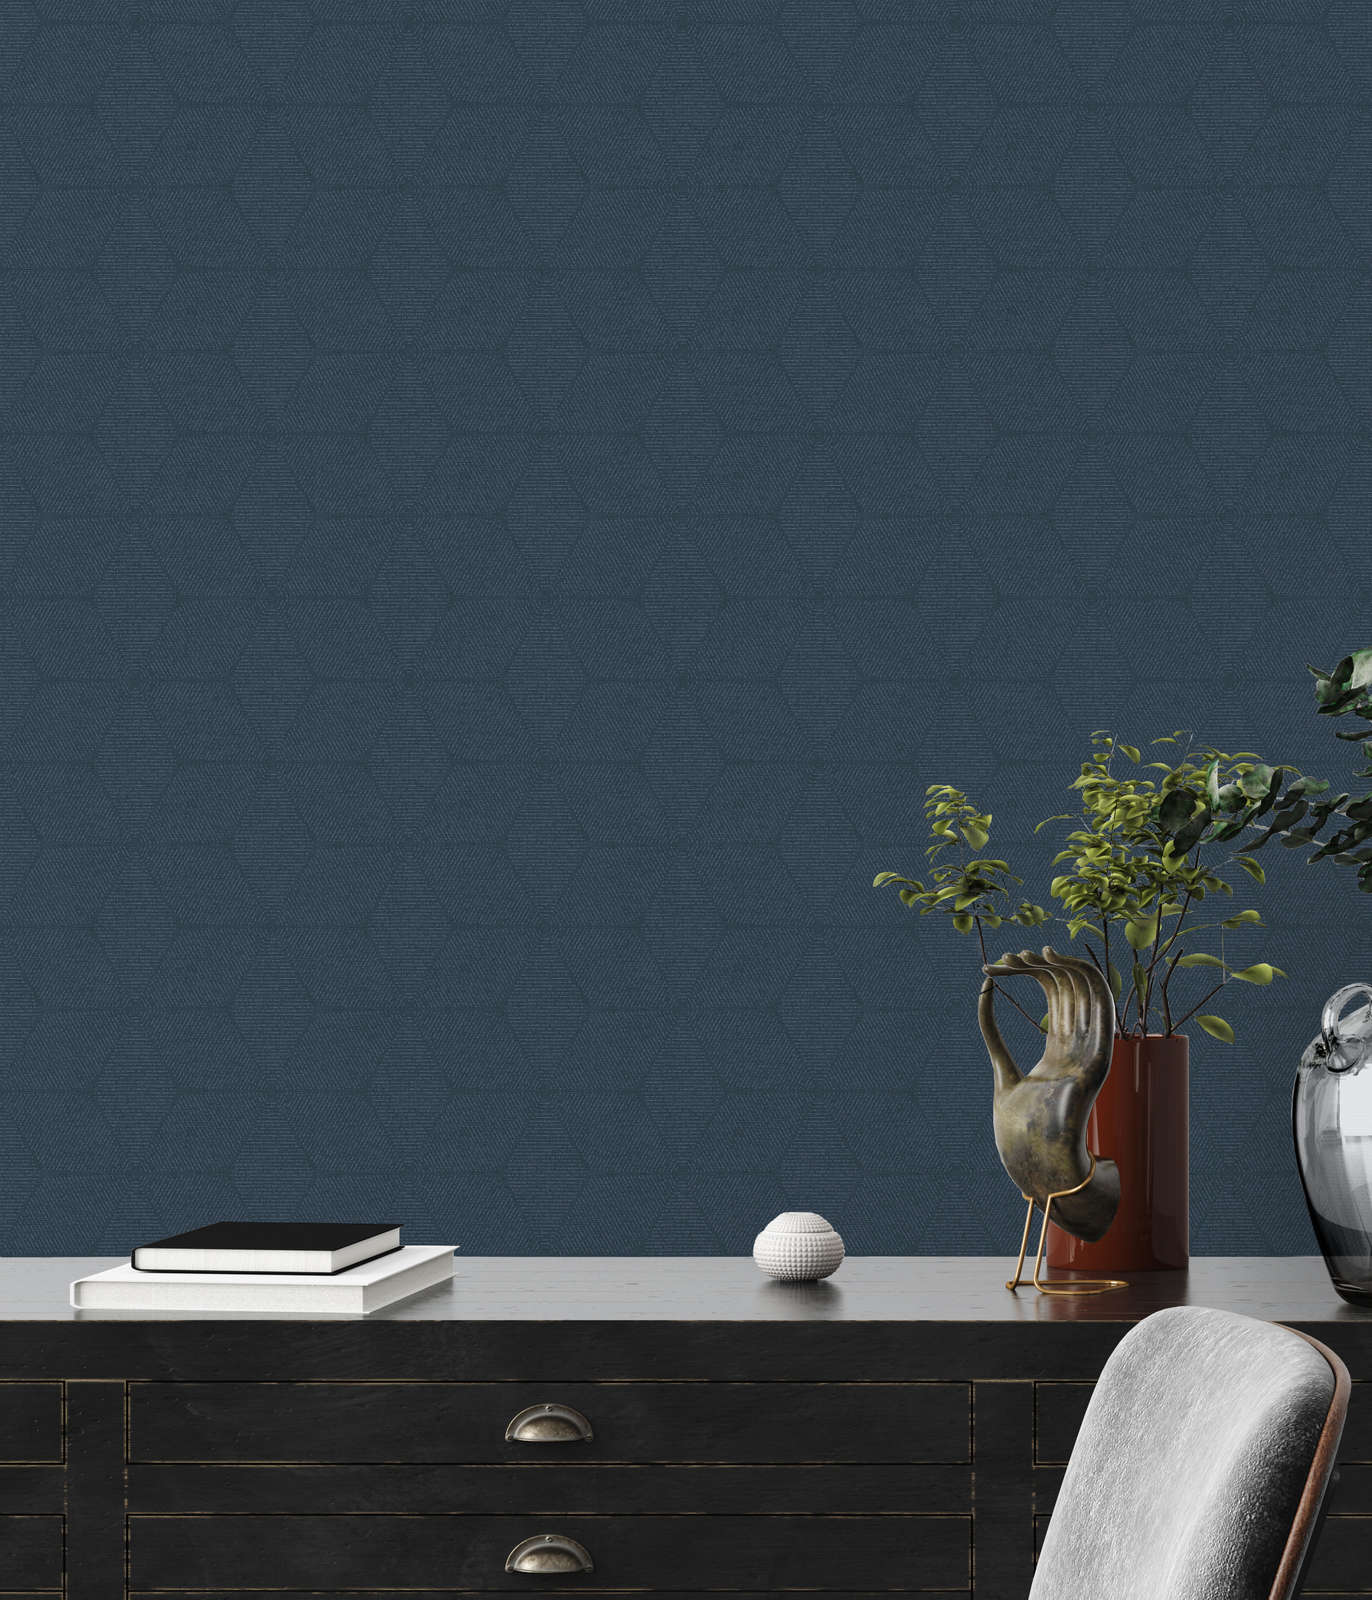             Non-woven wallpaper in a floral, monochrome pattern - blue
        